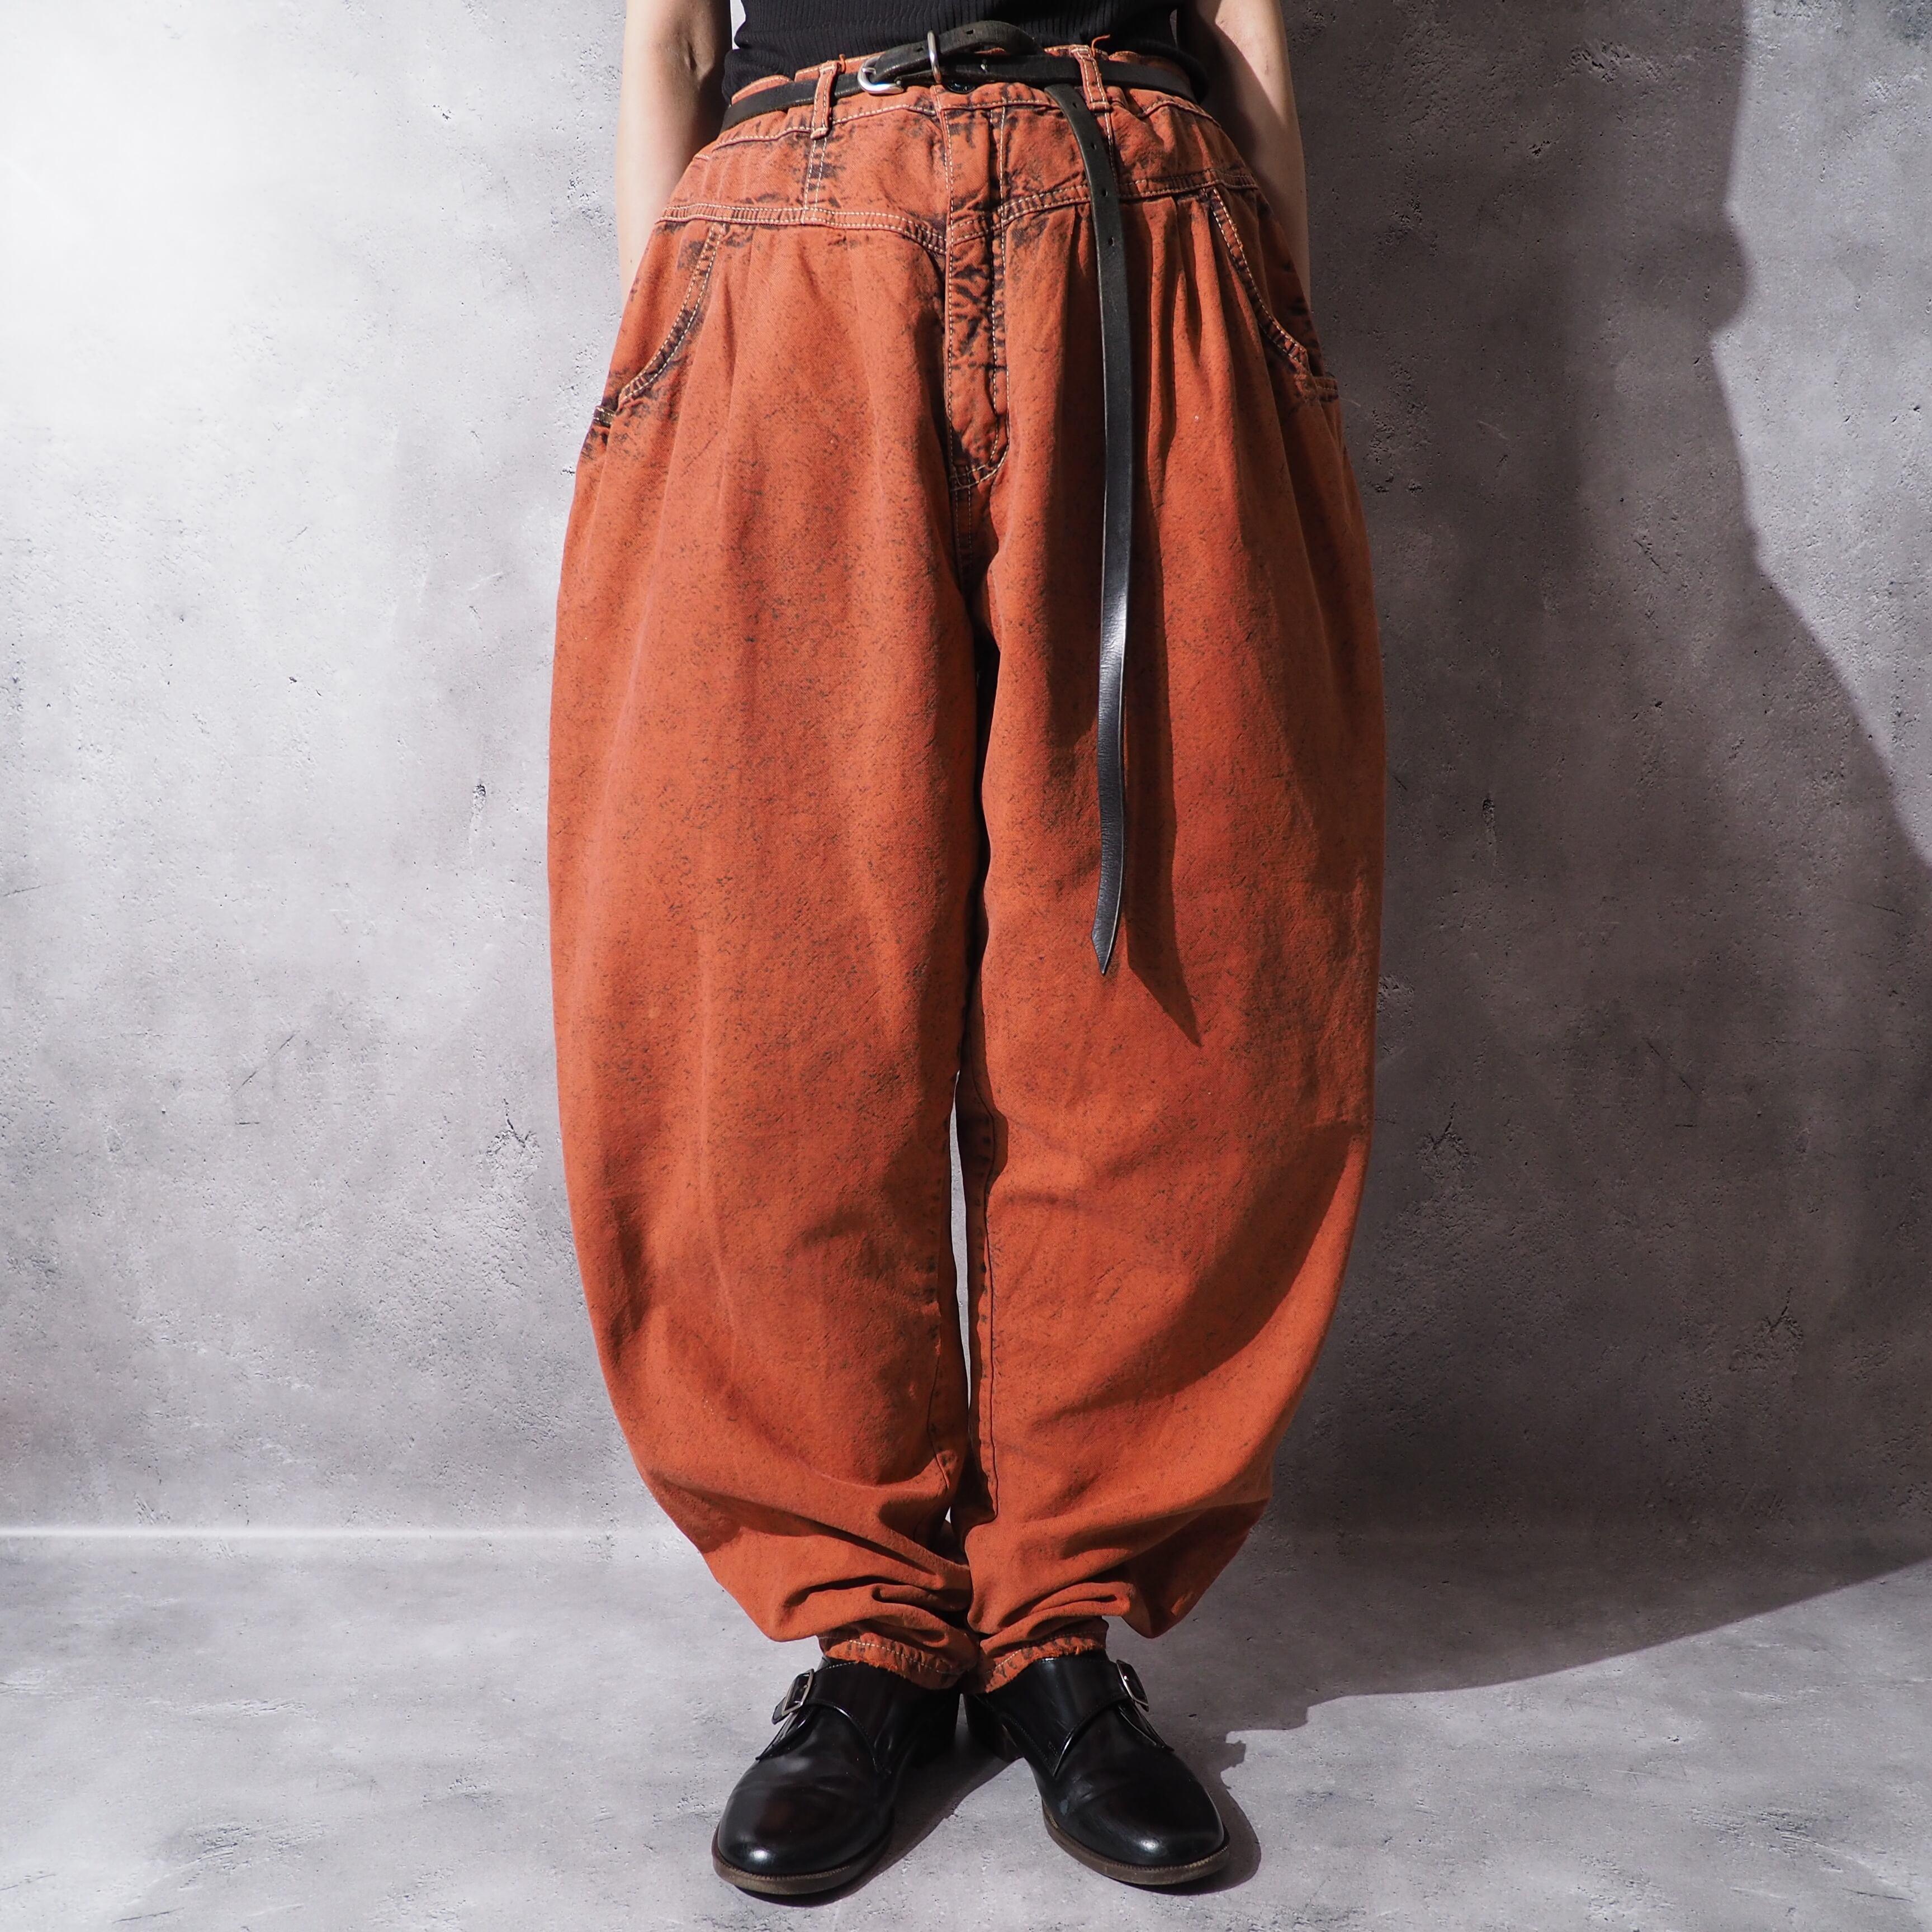 P.S Gitano ” piece dyeing wide silhouette cotton vintage pants ...